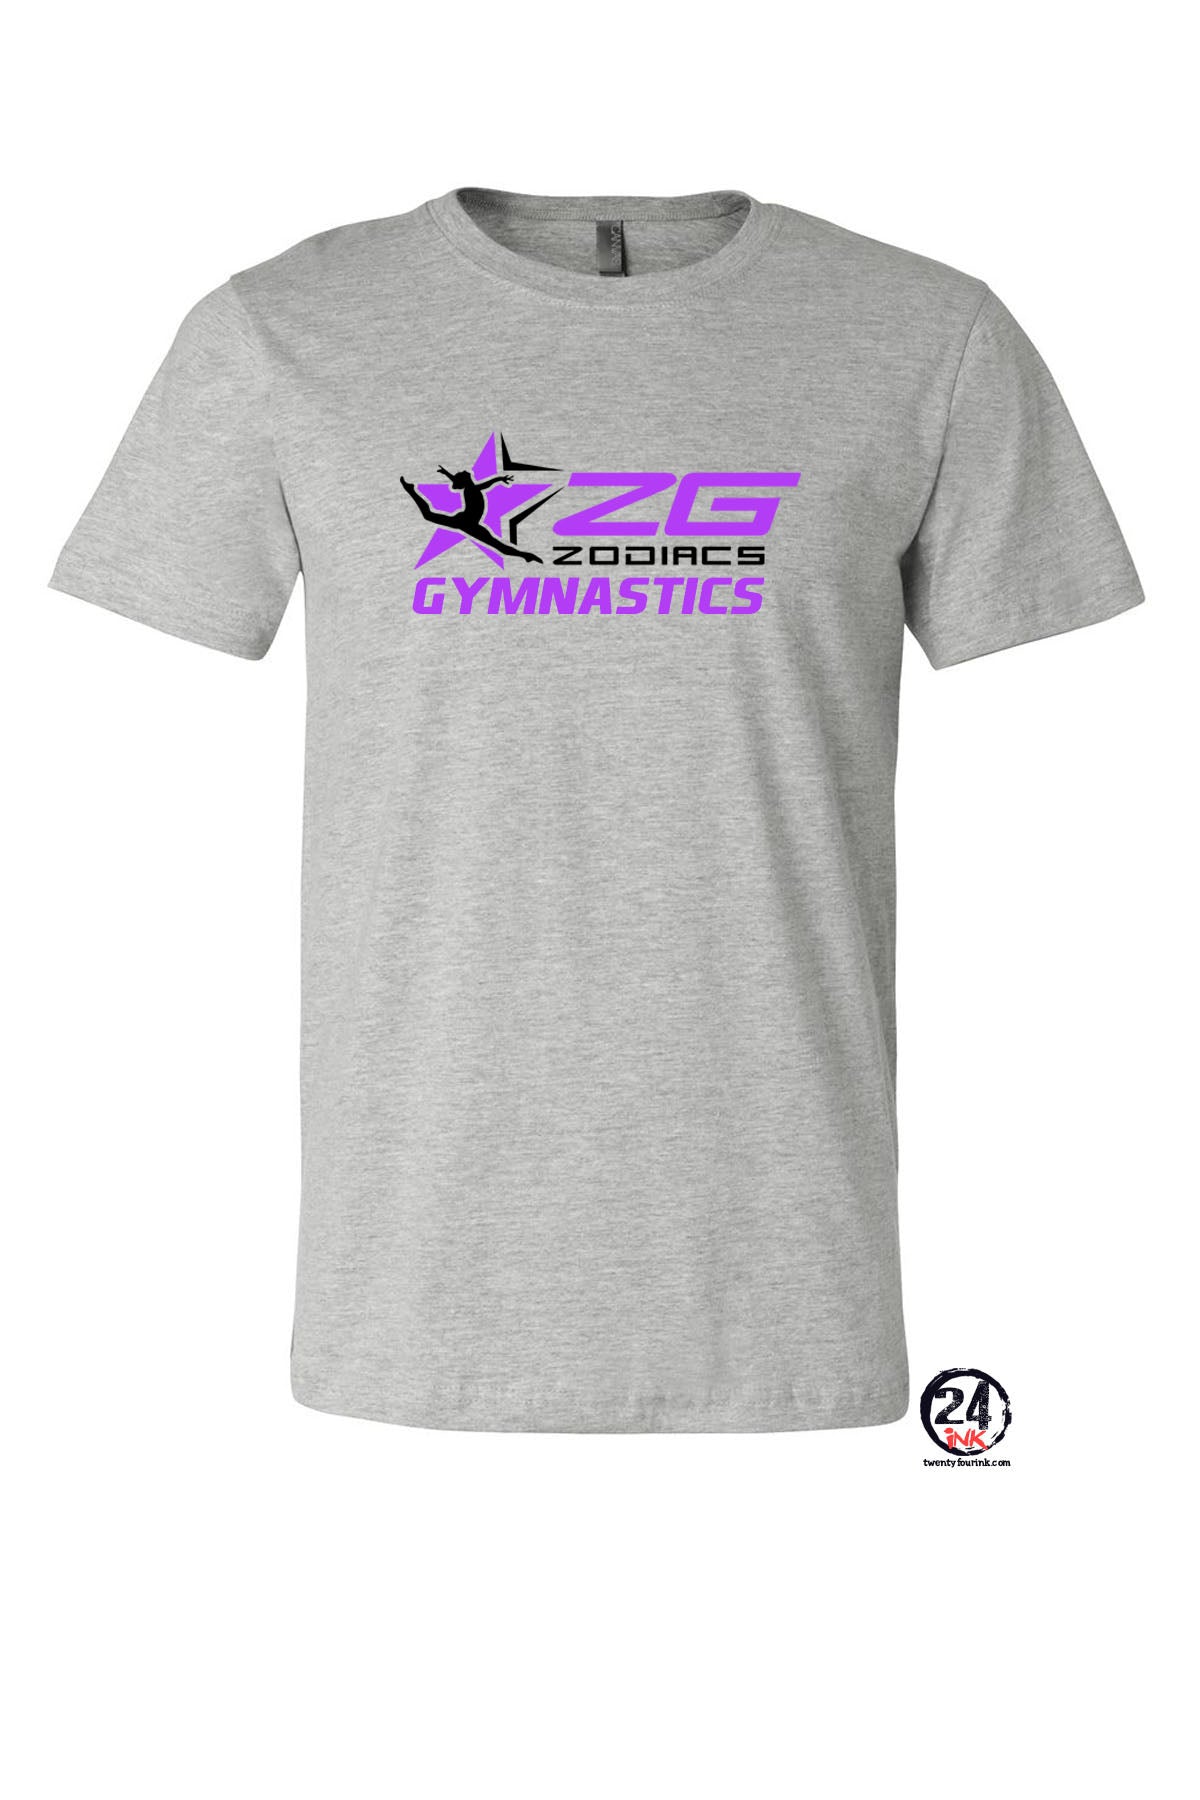 Zodiacs Gymnastics T-Shirt